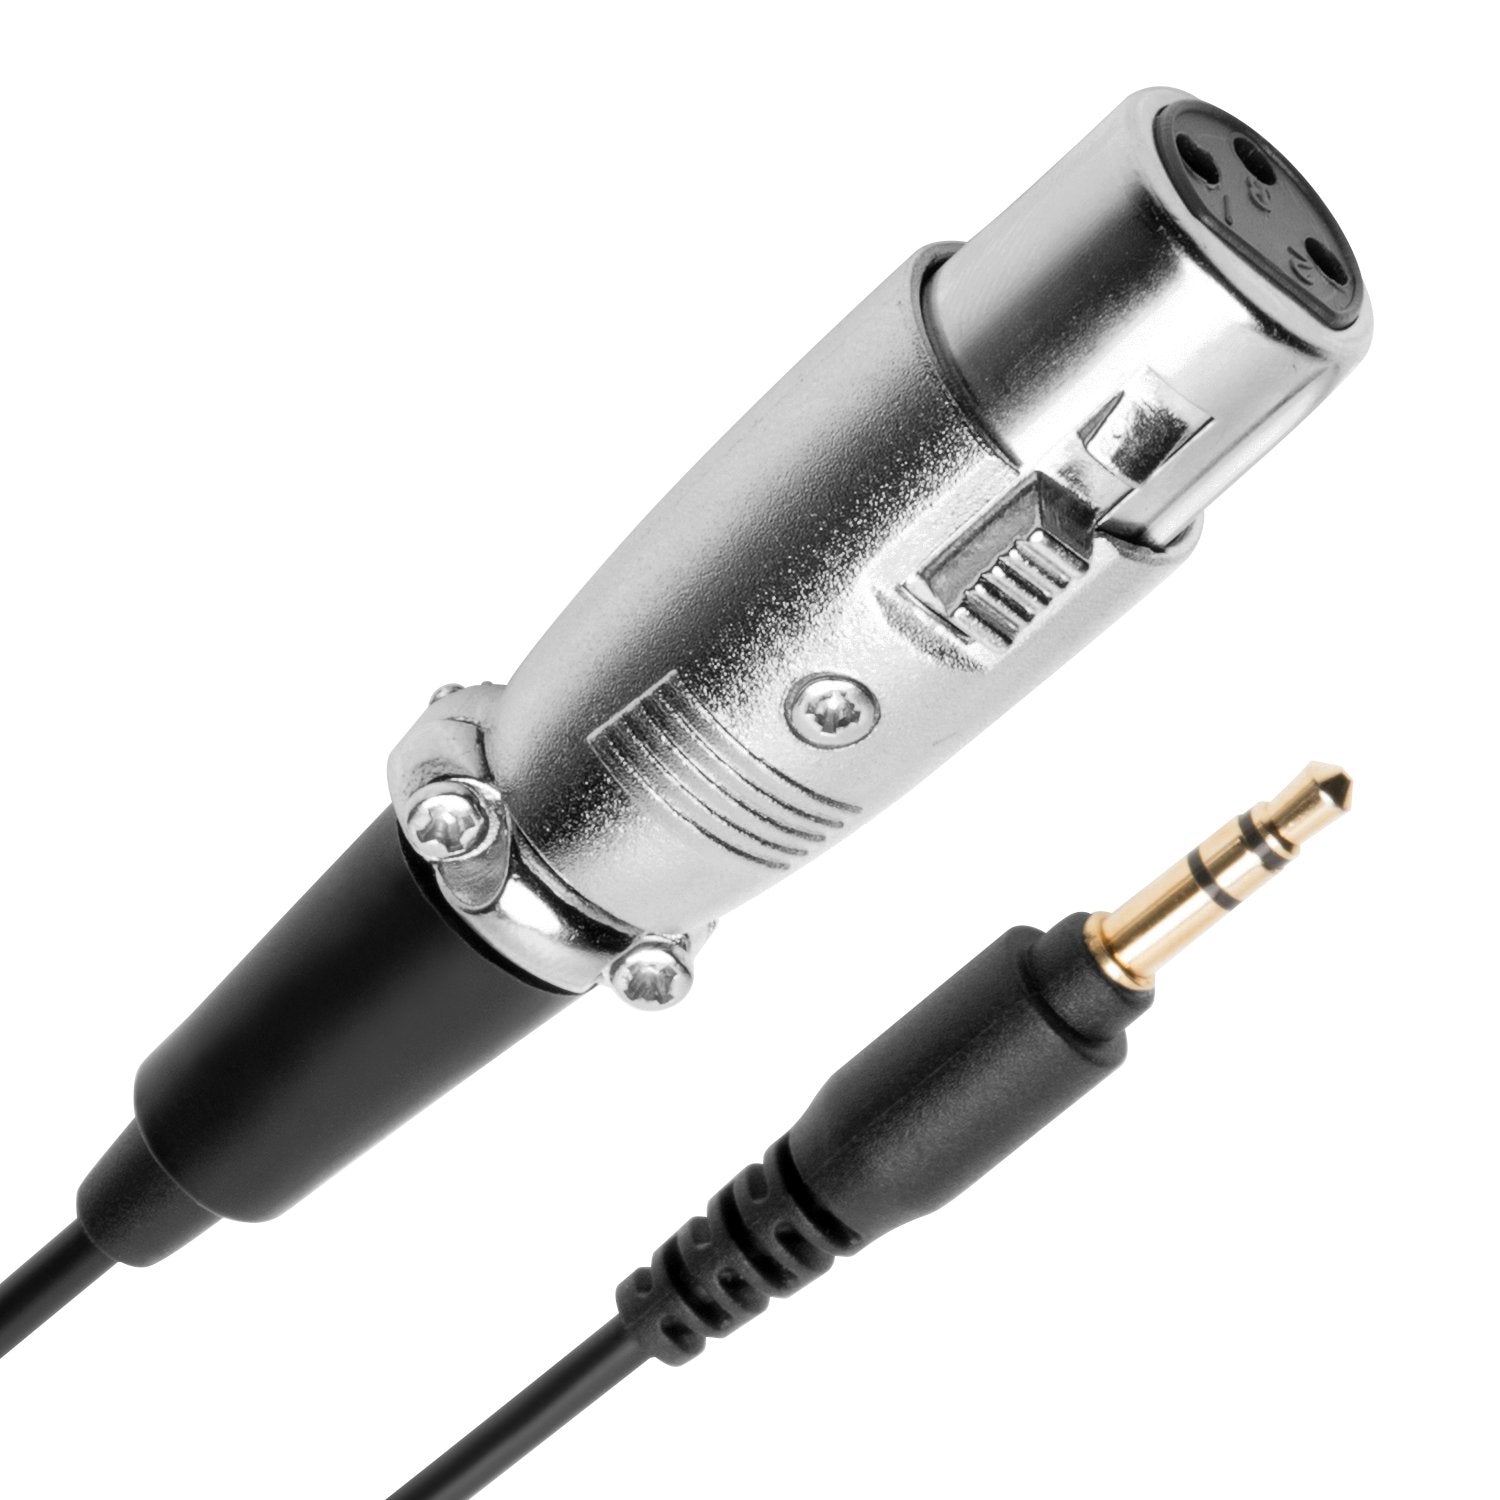 XLR Line-Level Pro Plus Audio Adapter